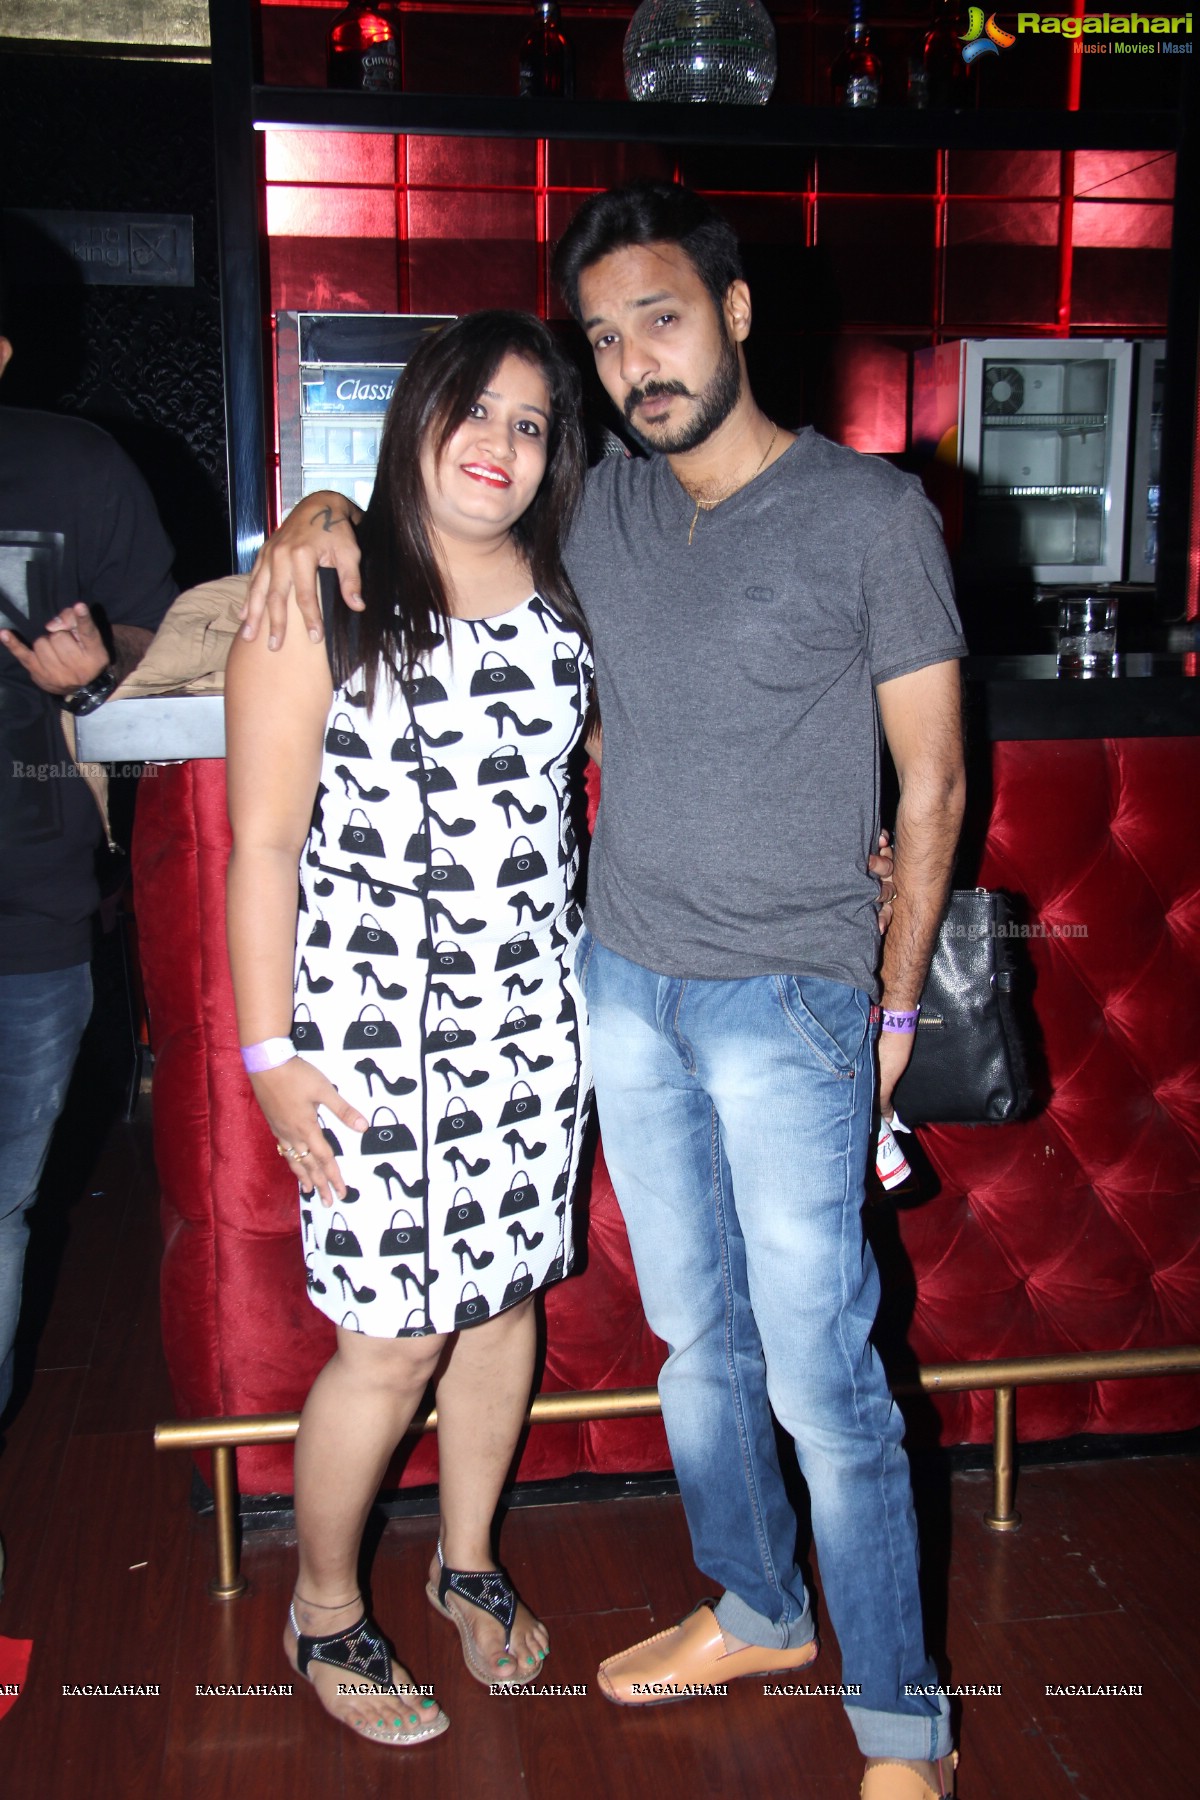 Super Saturday Night - DJ Yudi at Playboy Club Hyderabad - Event by Scale Events